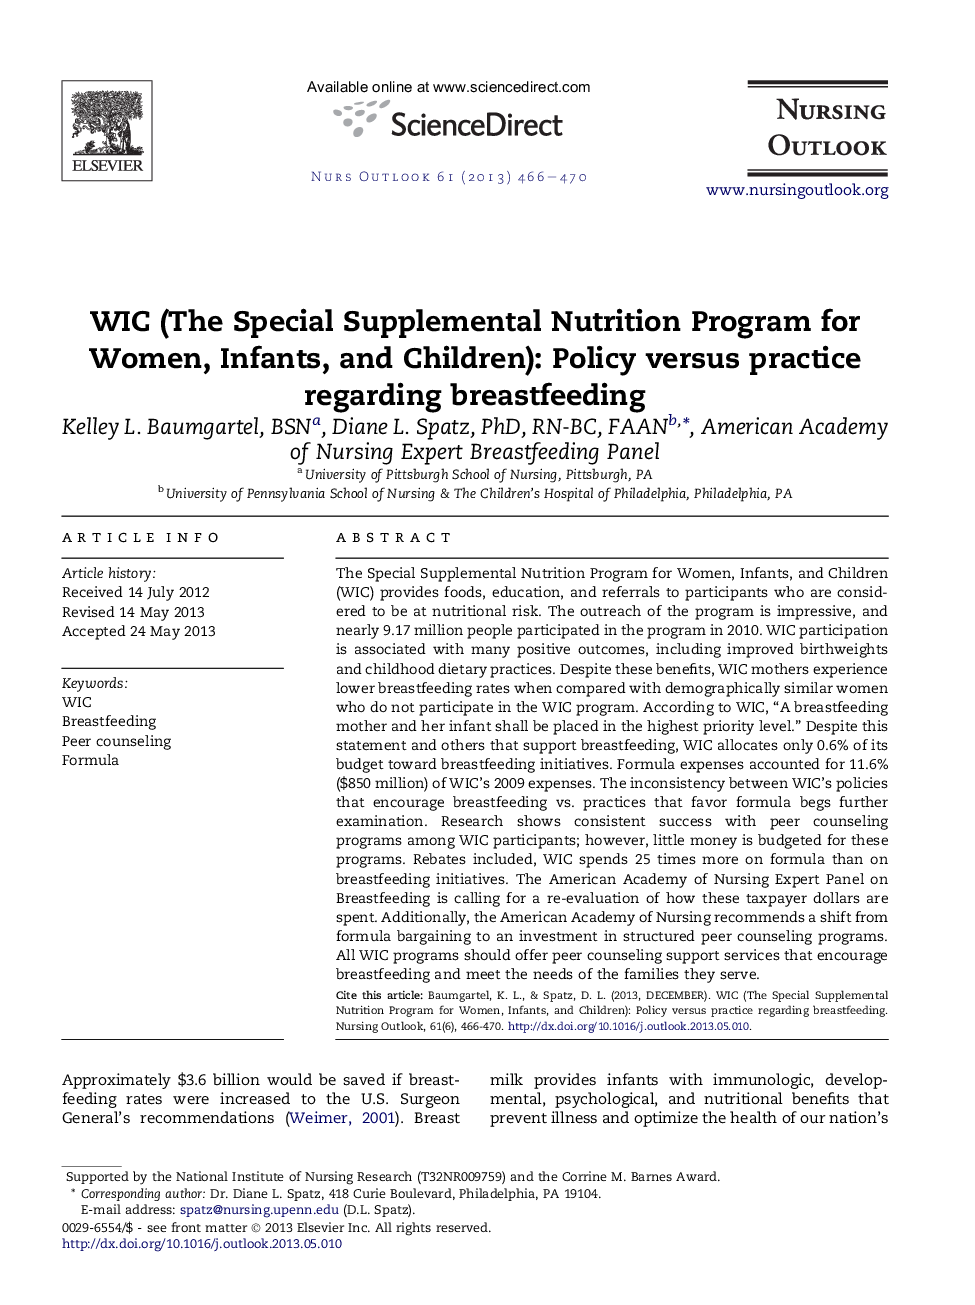 WIC (The Special Supplemental Nutrition Program for Women, Infants, and Children): Policy versus practice regarding breastfeeding 